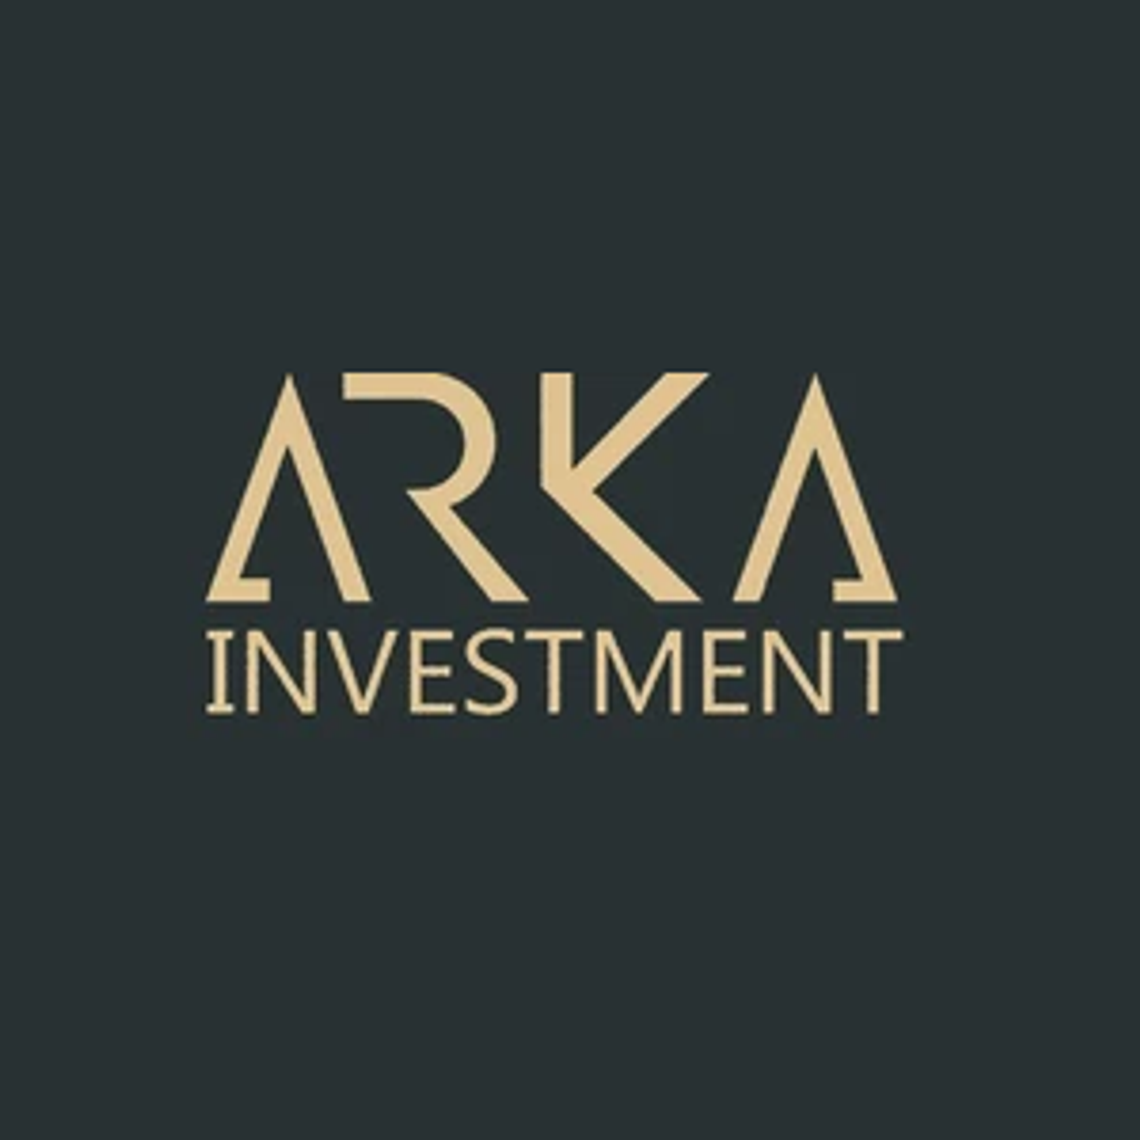 Arka Investment